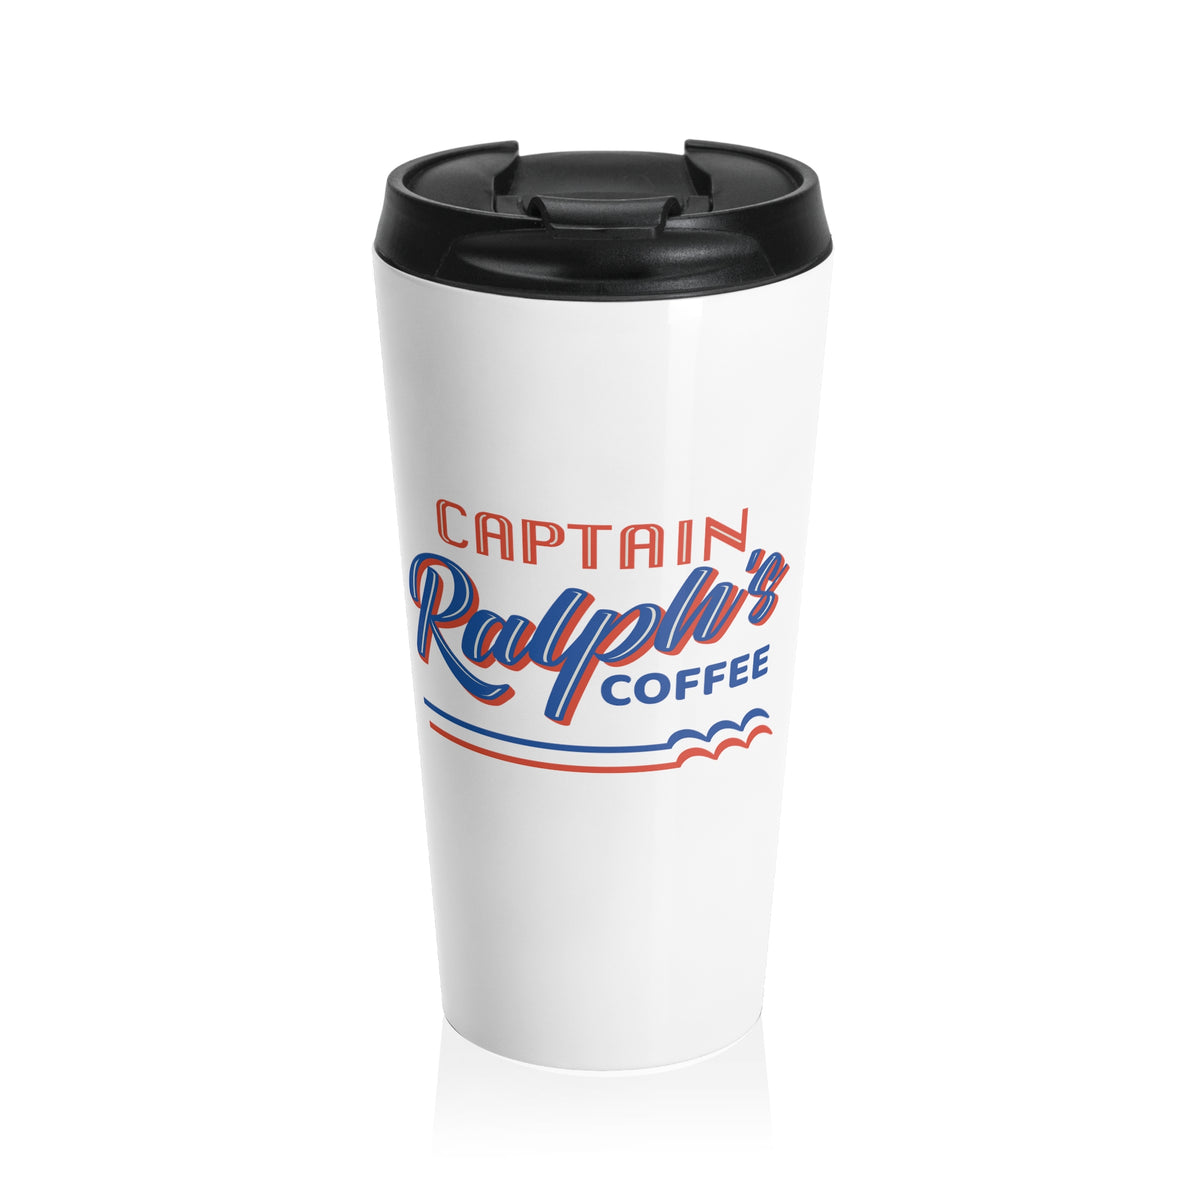 Captain Ralph's Coffee - Waves - Stainless Steel Travel Mug